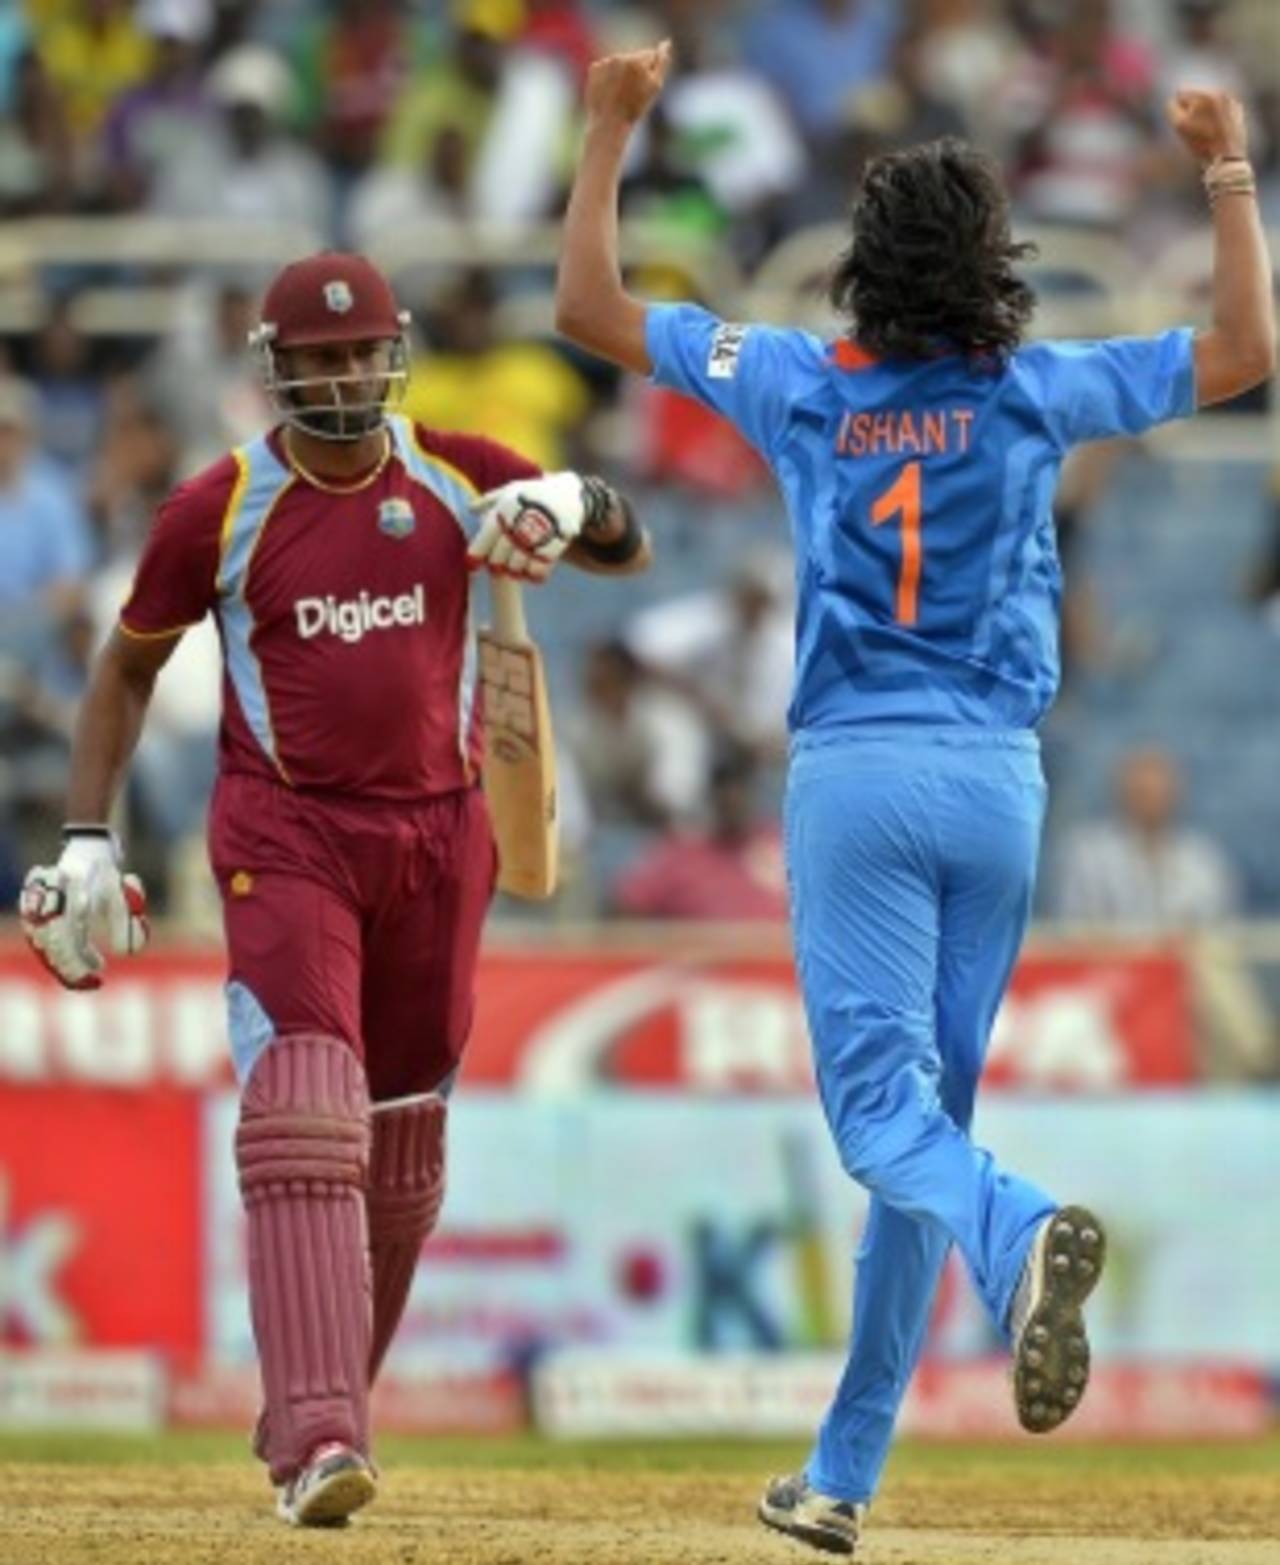 Ishant Sharma had Kieron Pollard caught behind for 4, West Indies v India, West Indies tri-series, Kingston, June 30, 2013